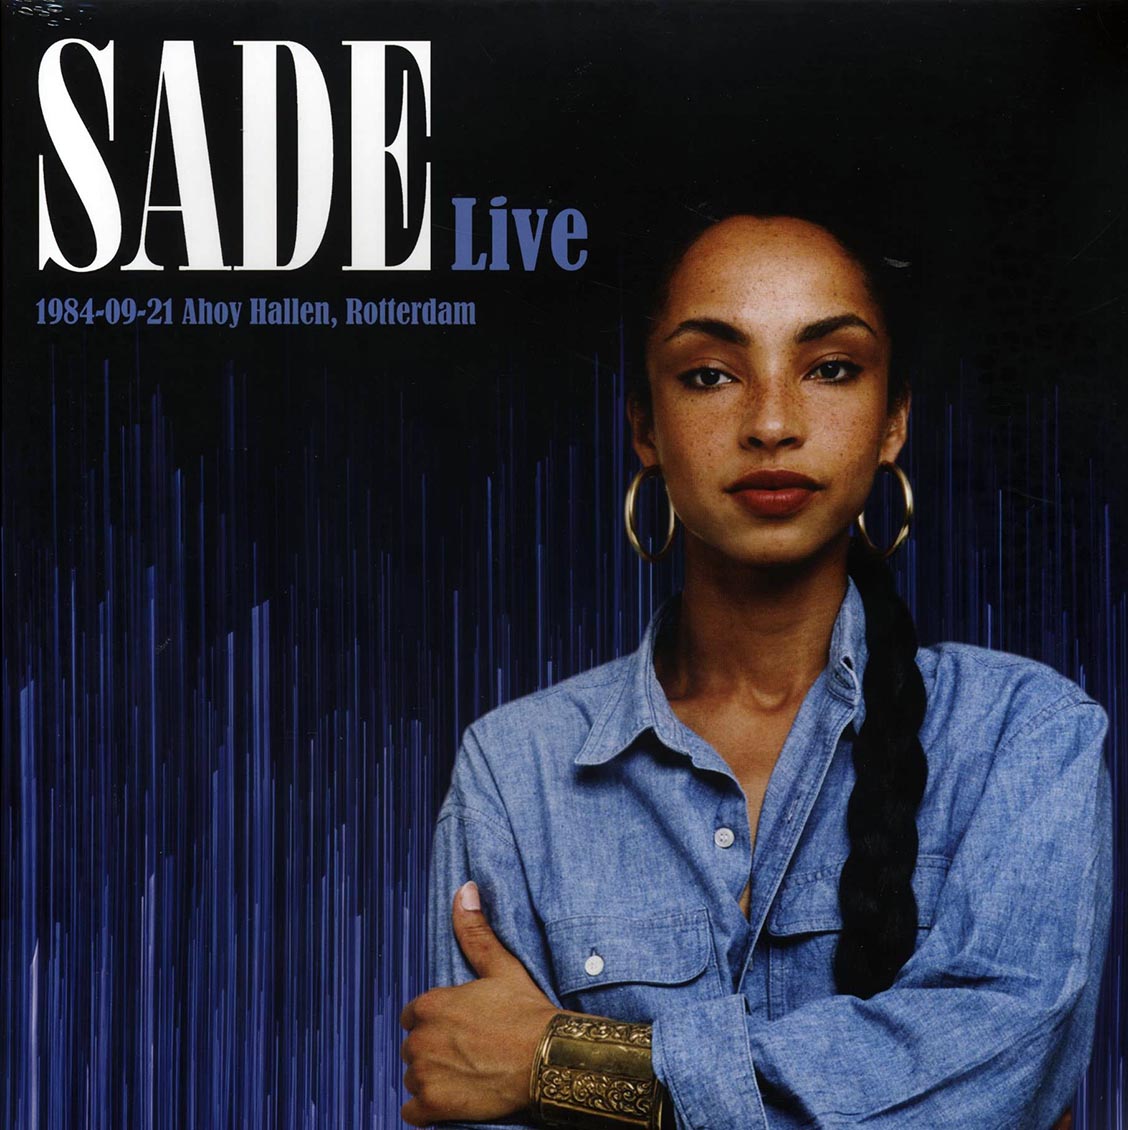 Sade - Live 1984-09-21 Ahoy Hallen, Rotterdam [2023 Unofficial] [New Double Vinyl Record LP]